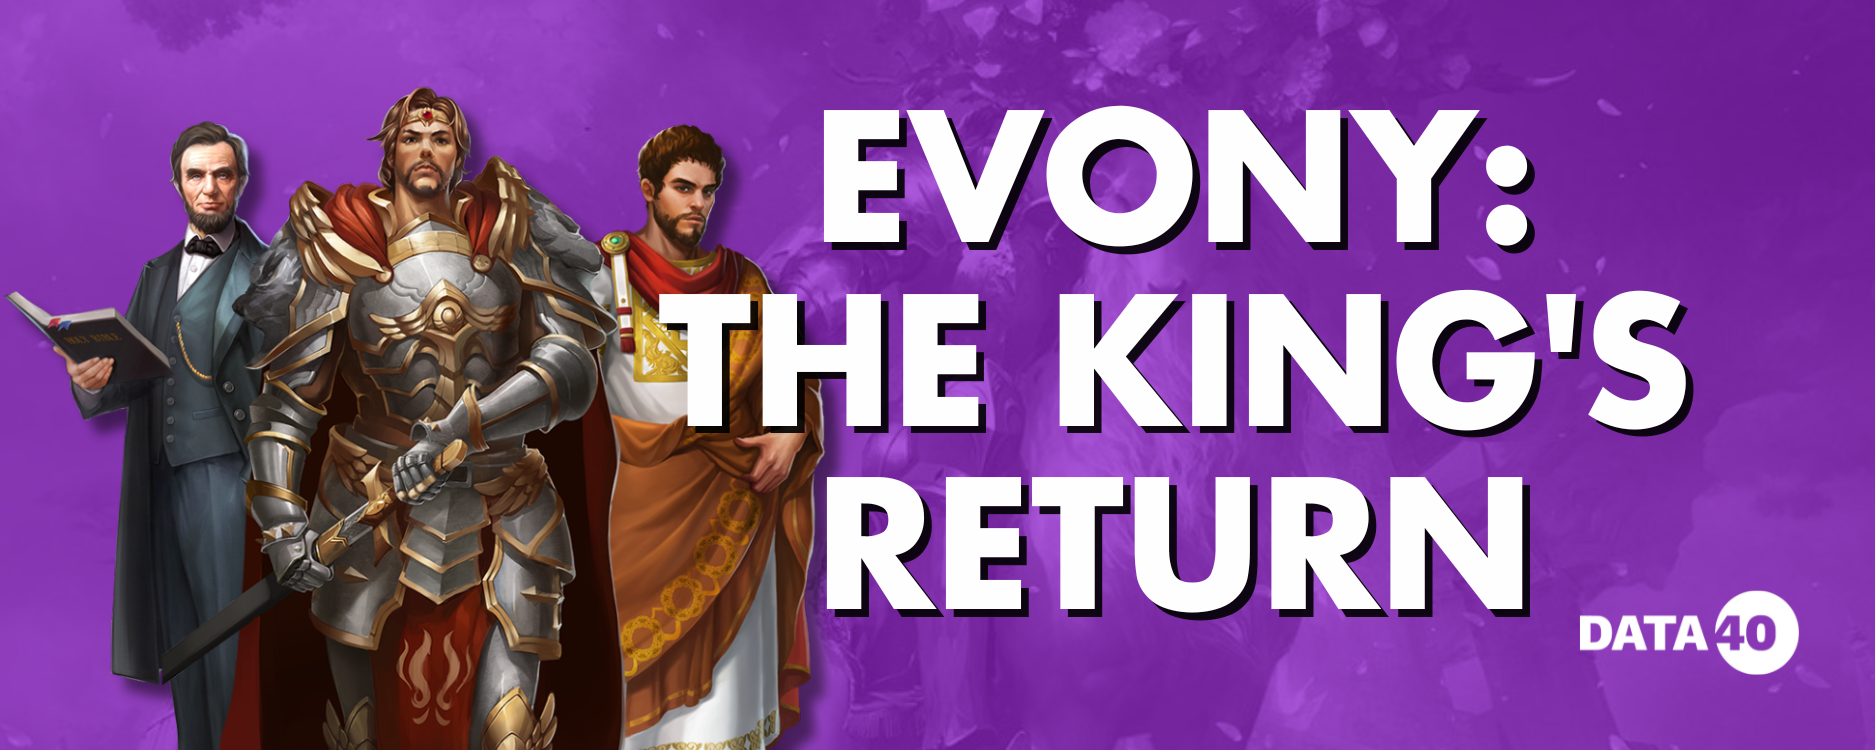 Evony_ The King's Return